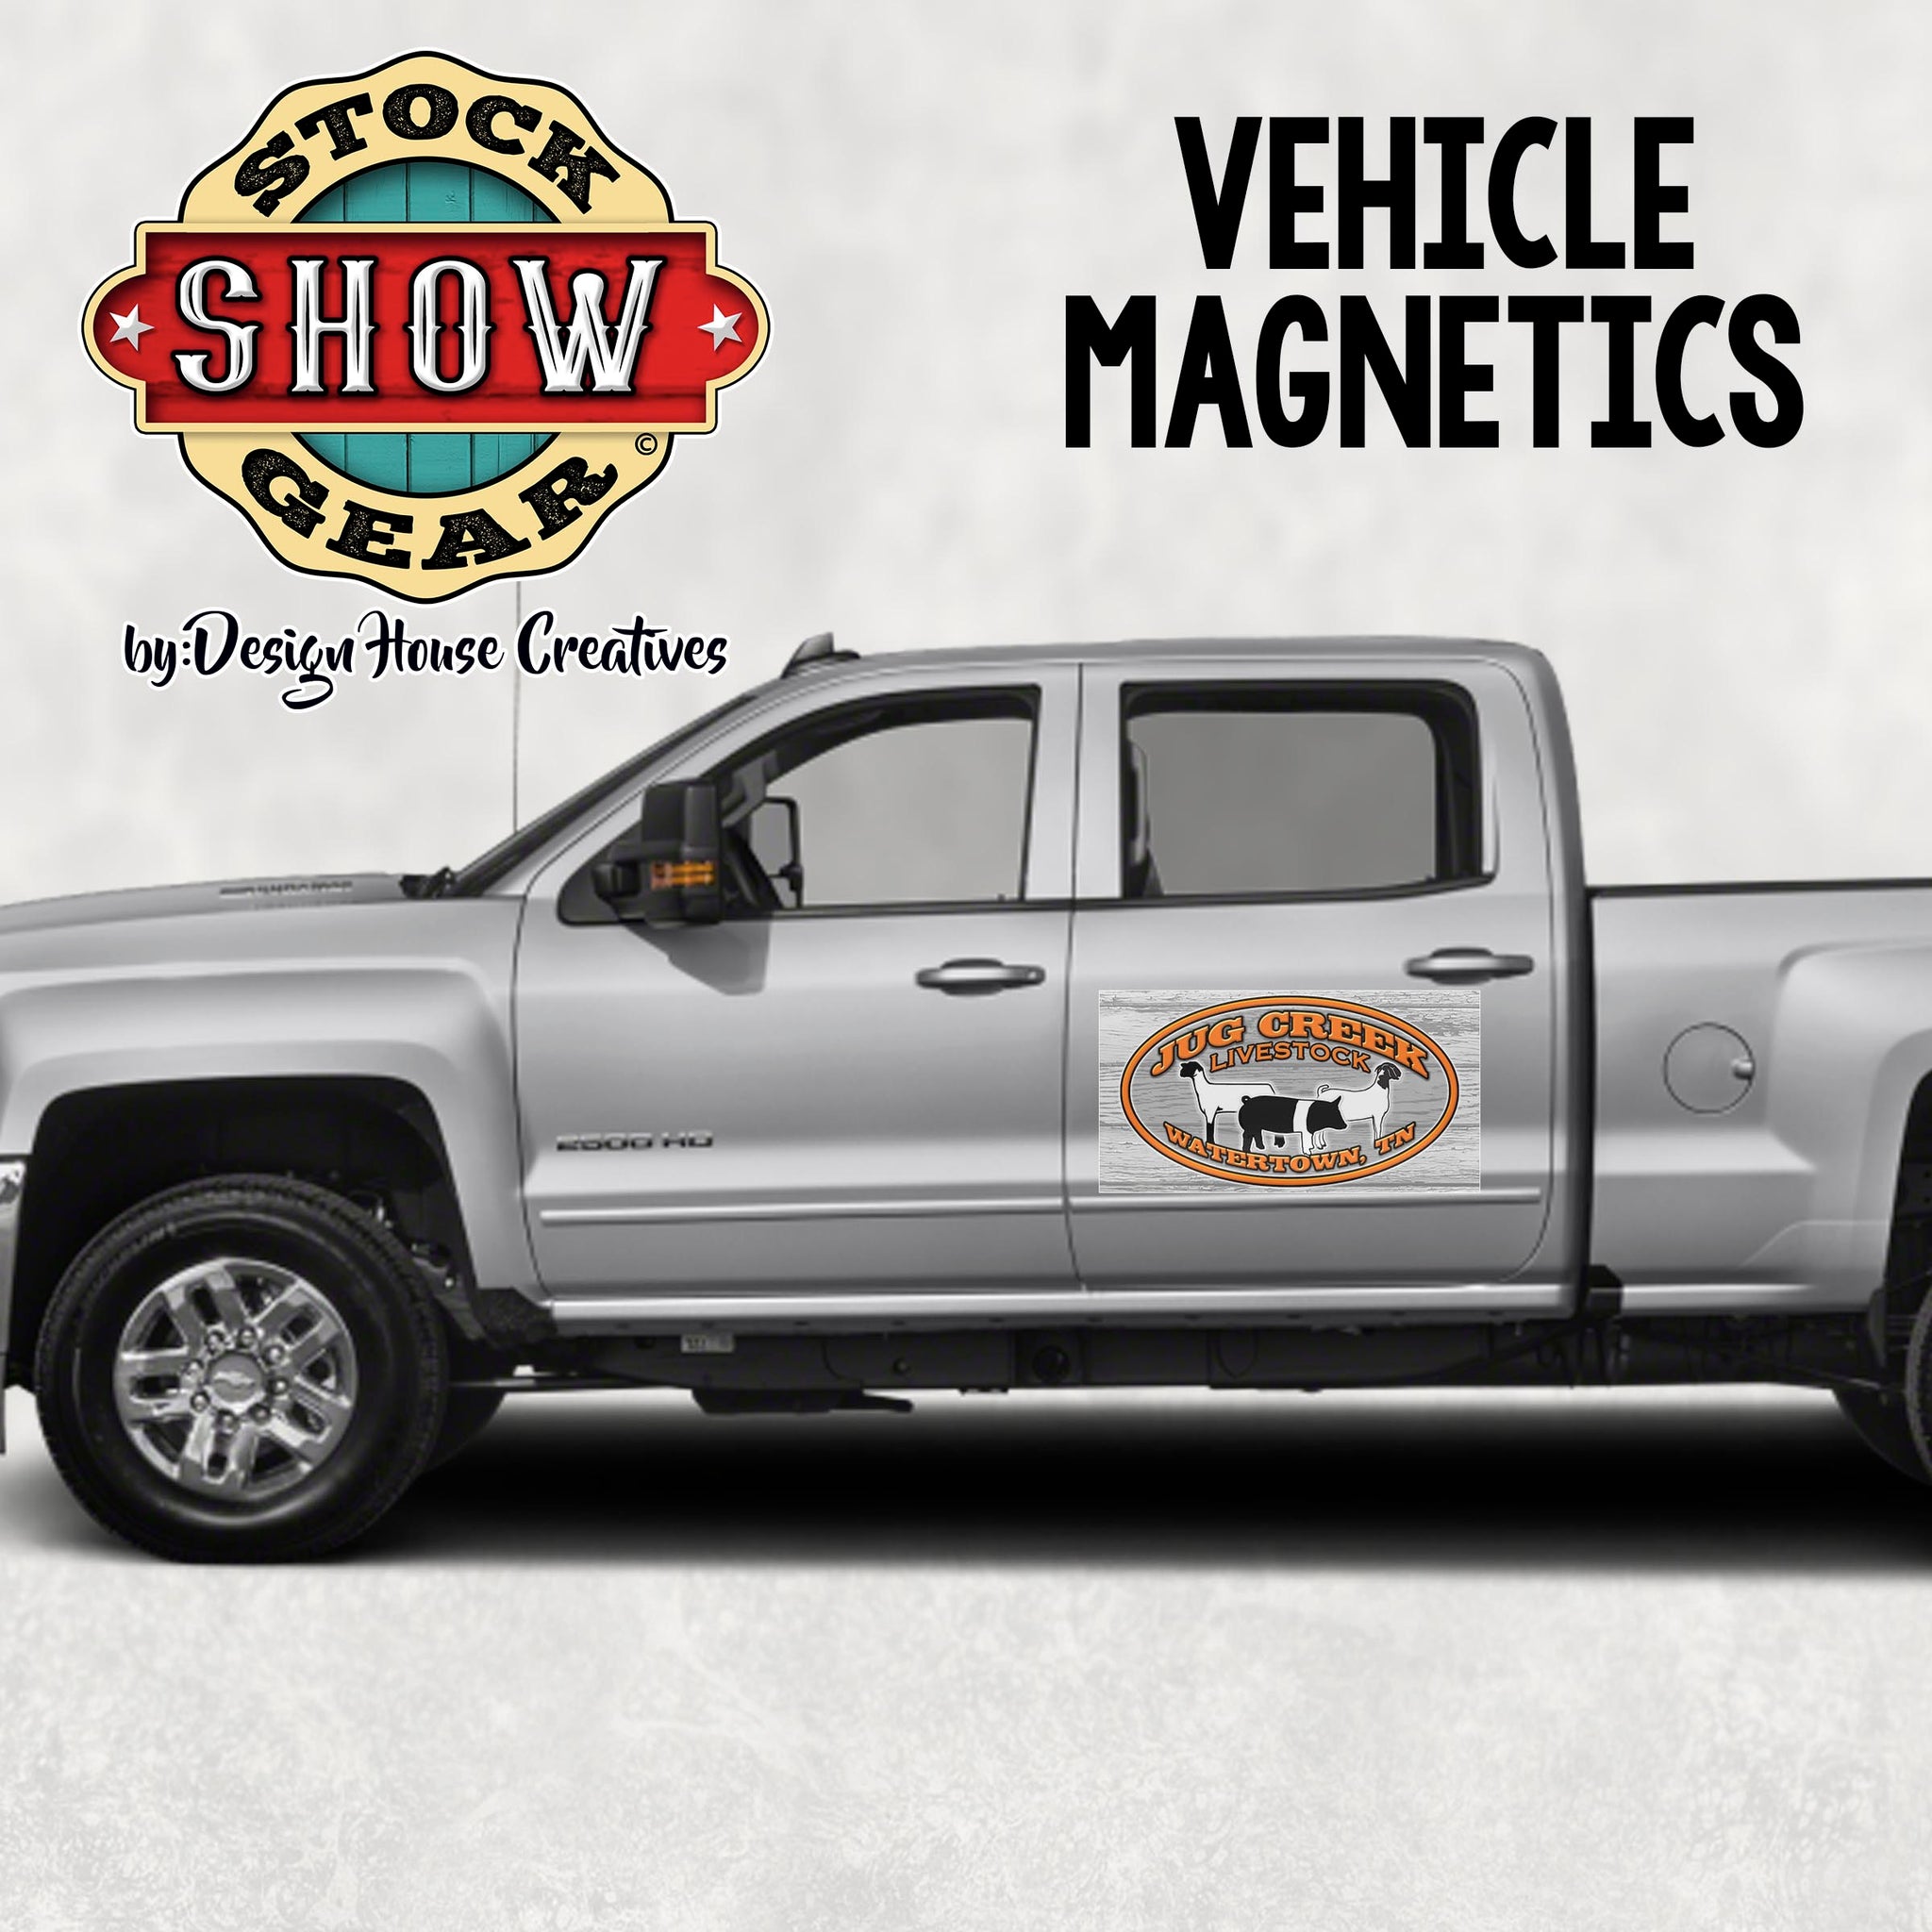 Stock Show Award Vehicle Magnetics